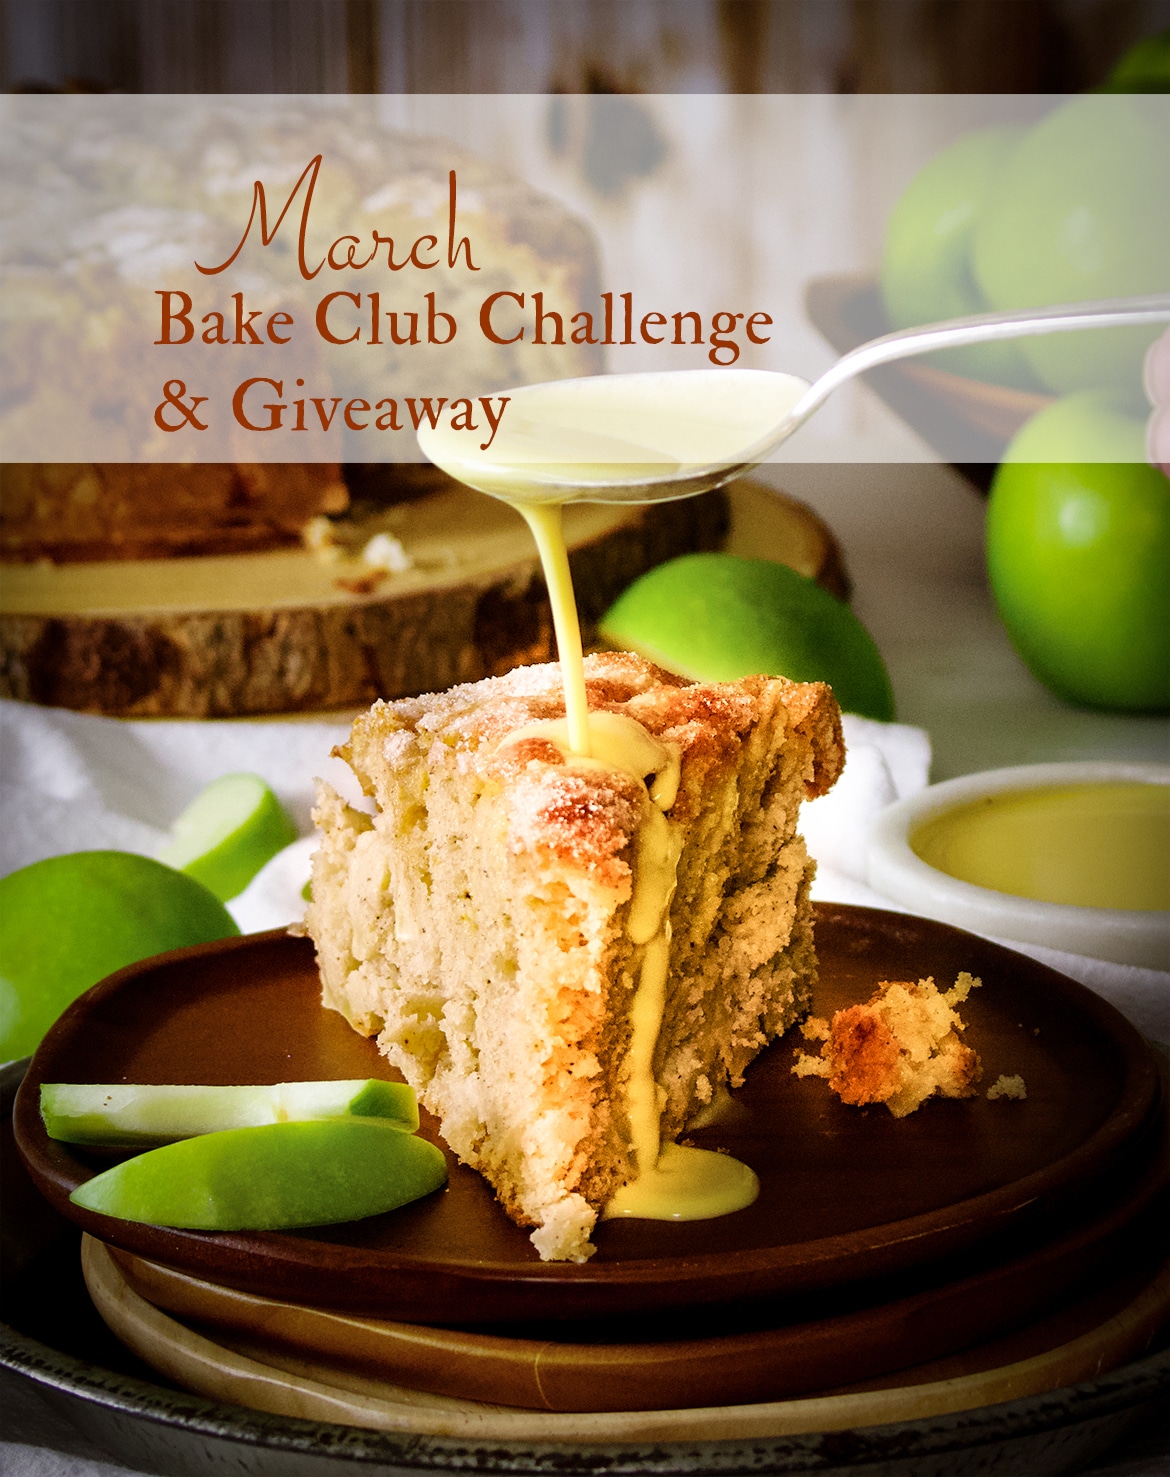 The March Bake Club Challenge recipe is Irish Apple Cake with Custard Sauce.